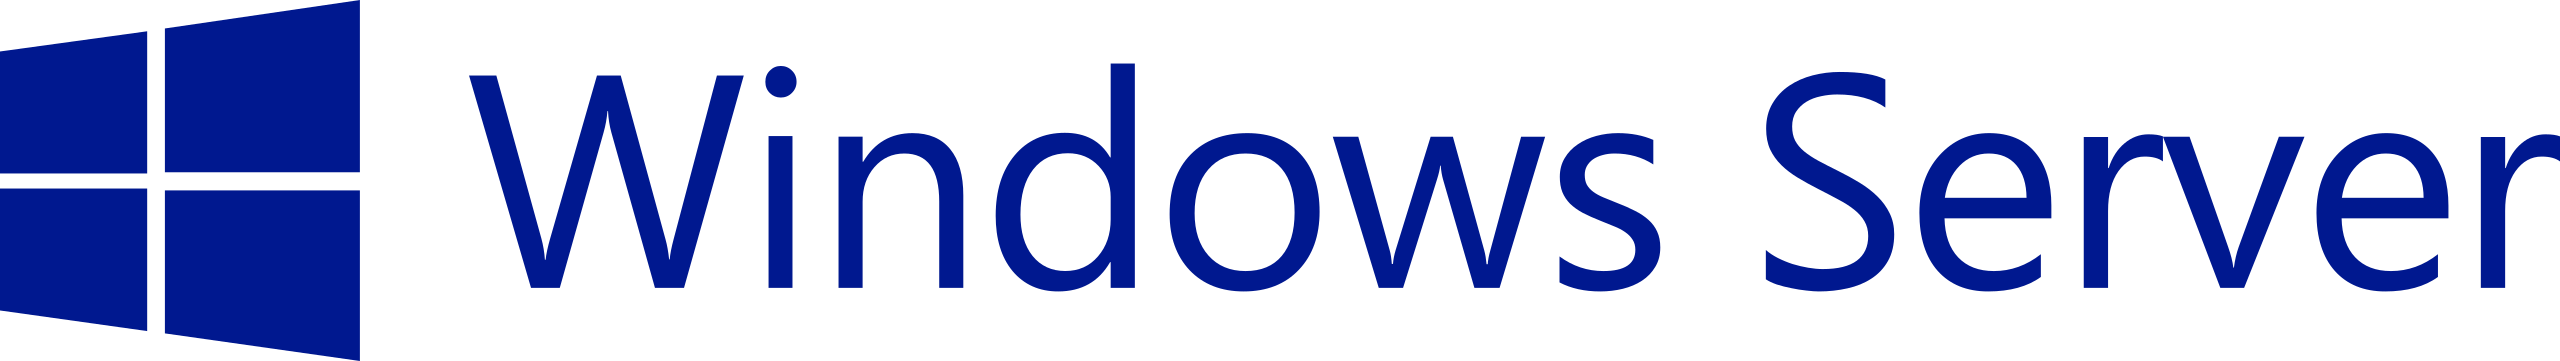 Windows_Server_logo.svg